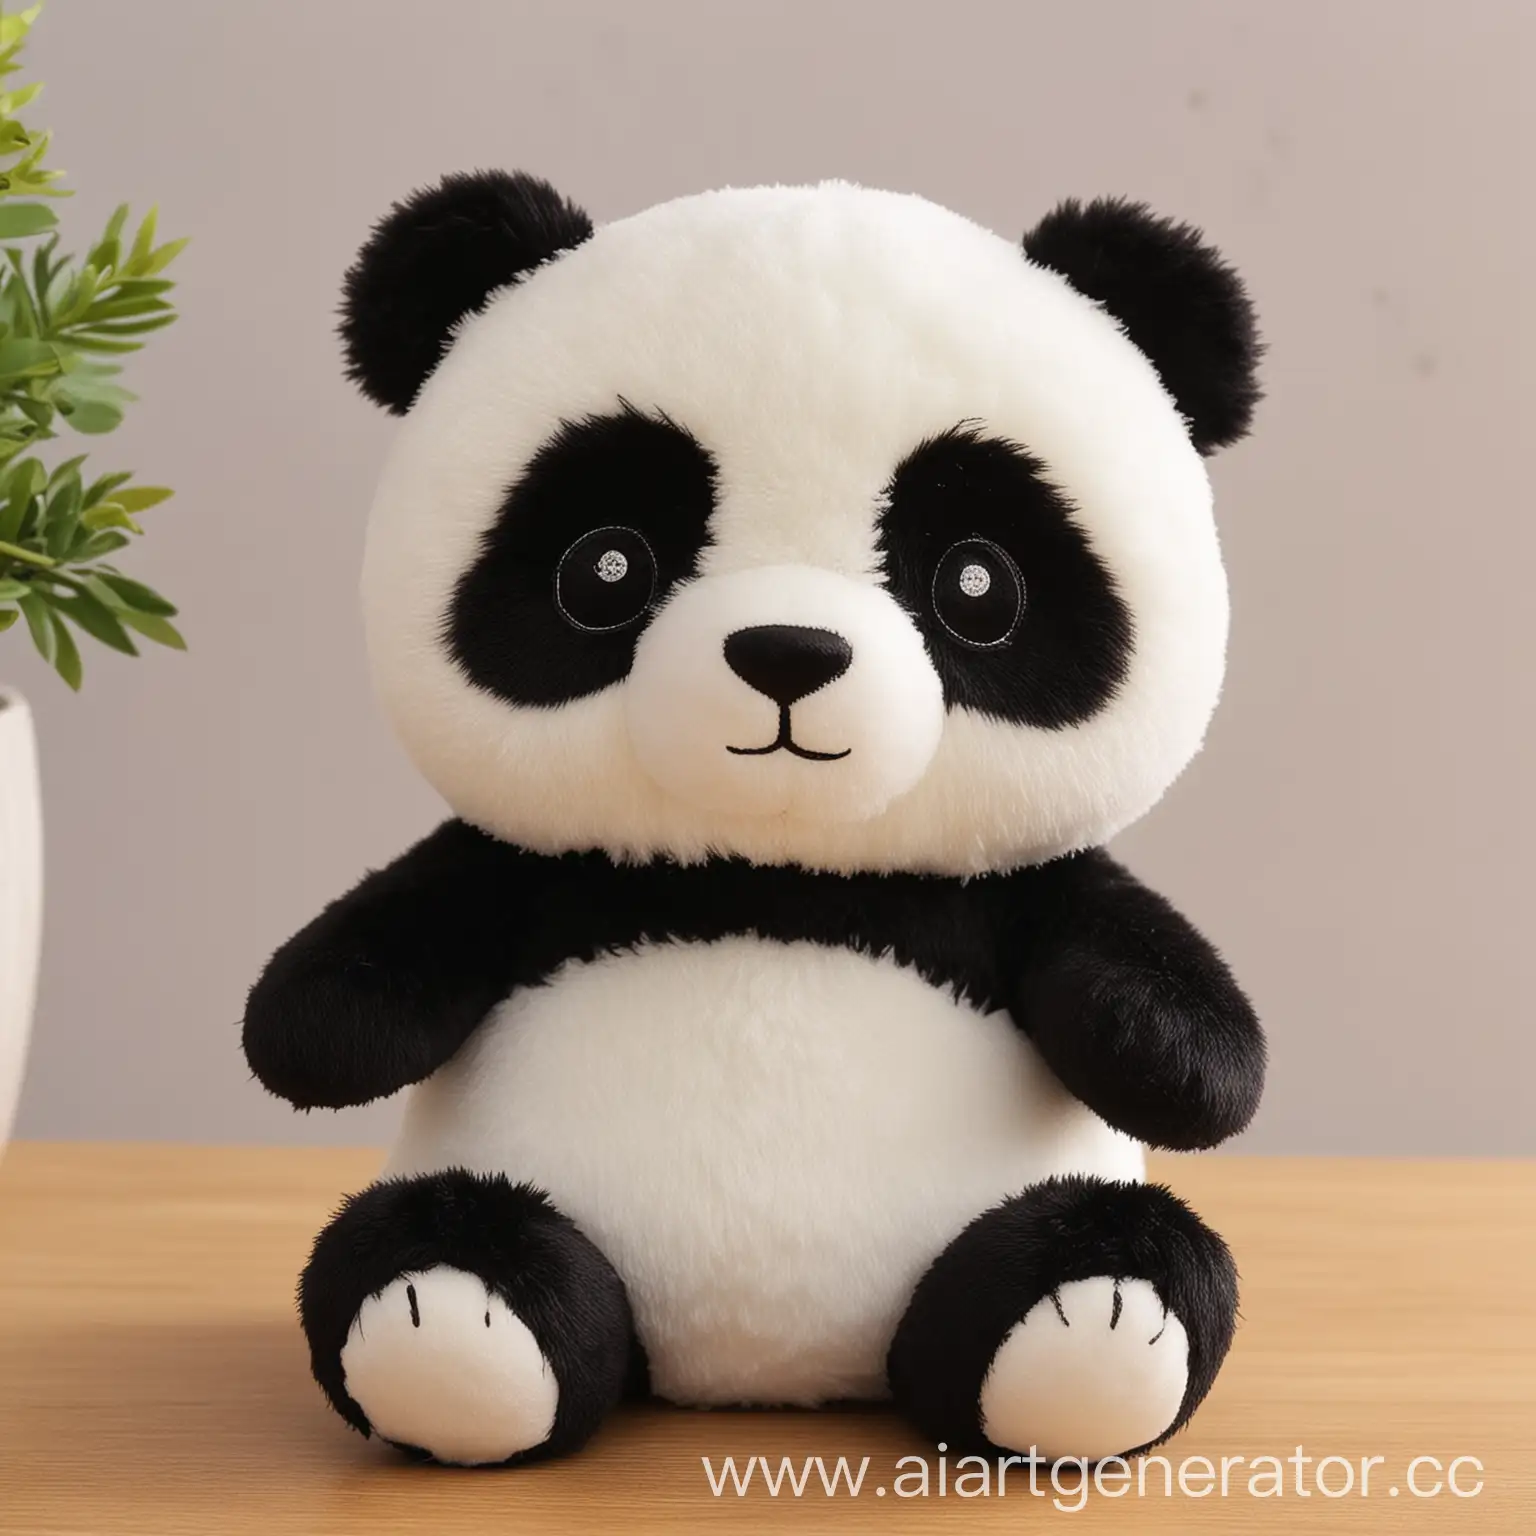 Cute little panda plush toy